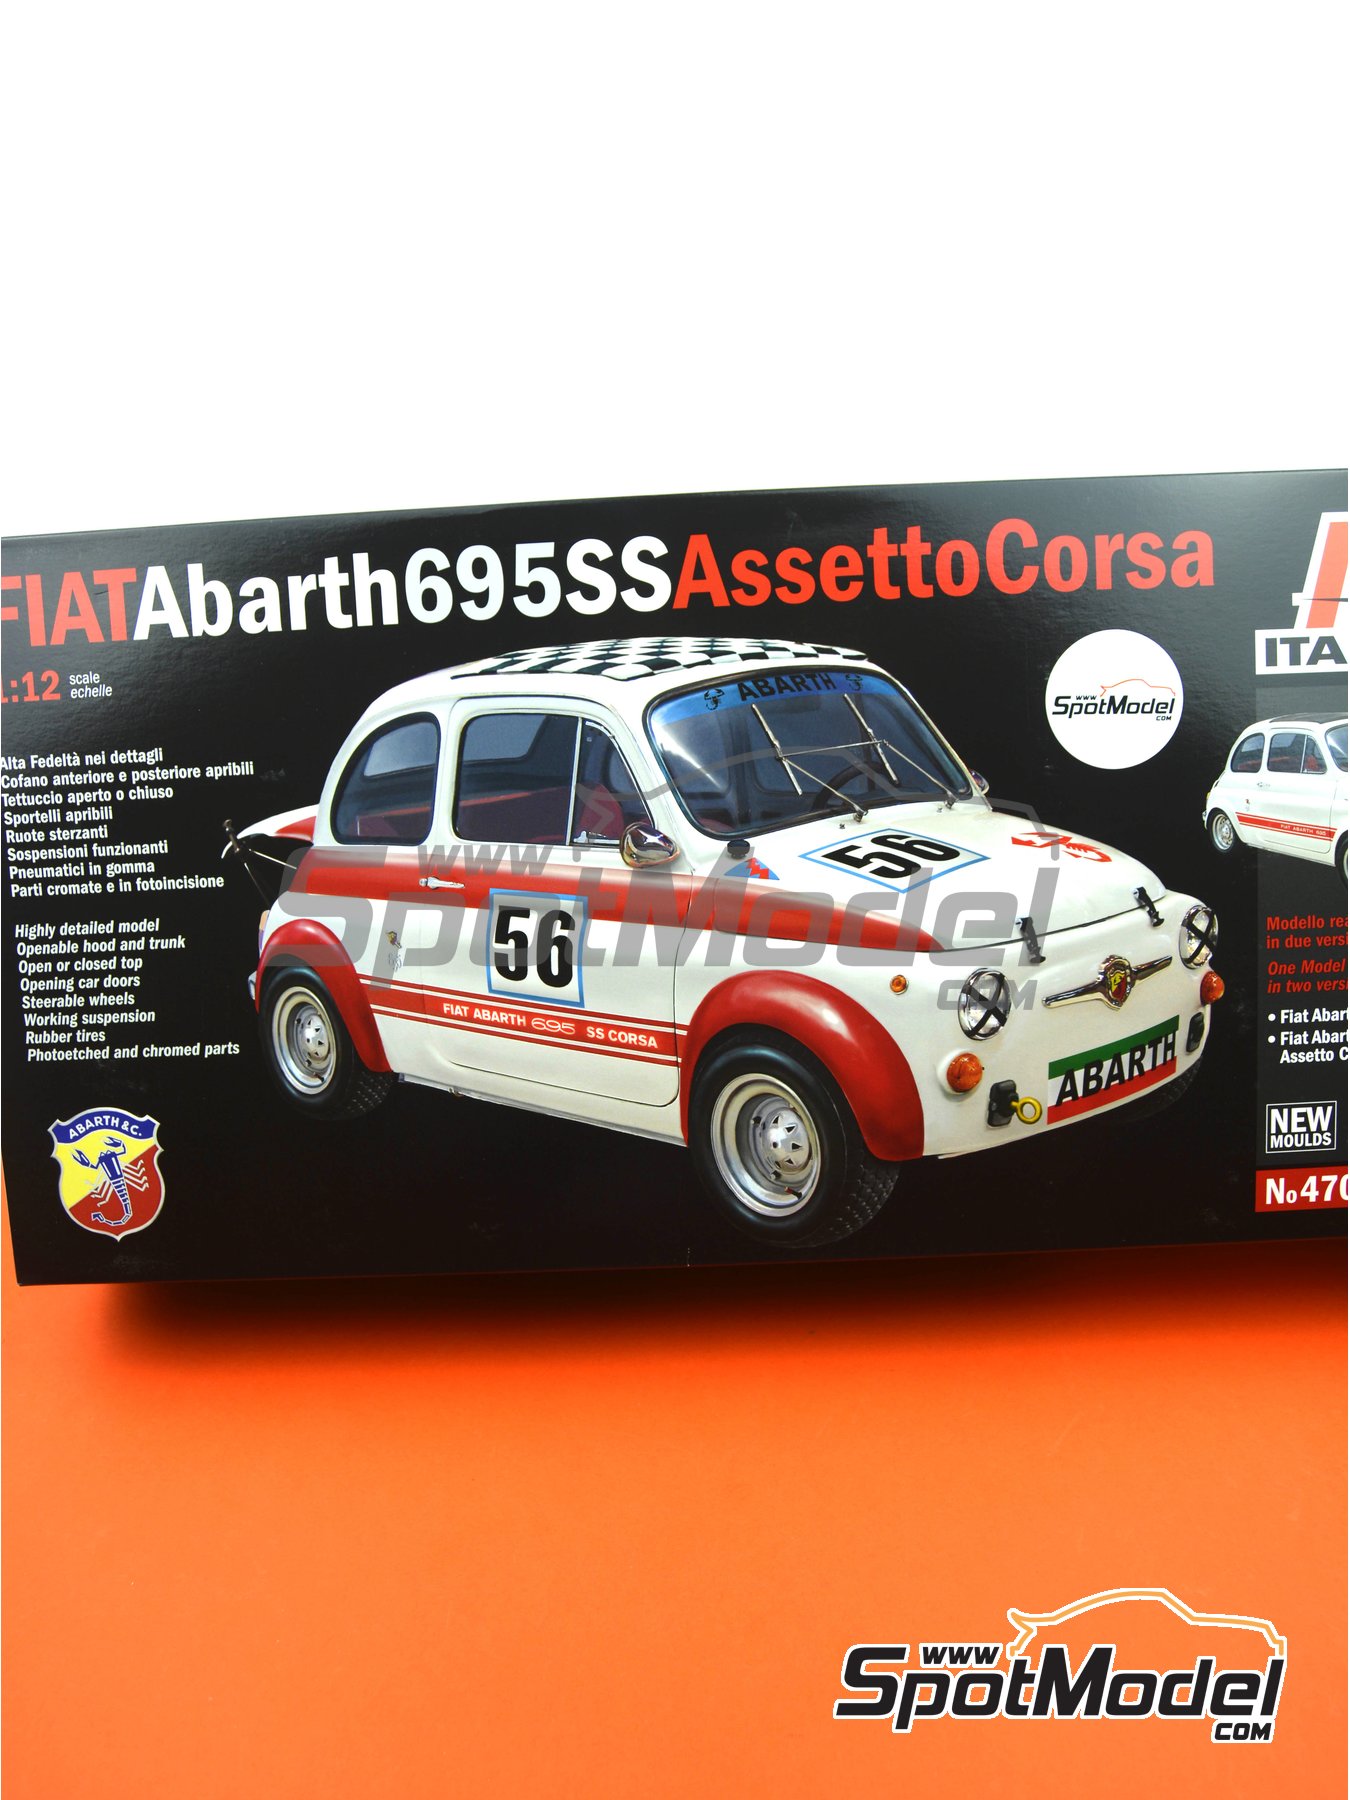 1:12 Italeri Fiat 500 Abarth 695Ss Assetto Corsa 1968 Kit IT4705 Modellino 